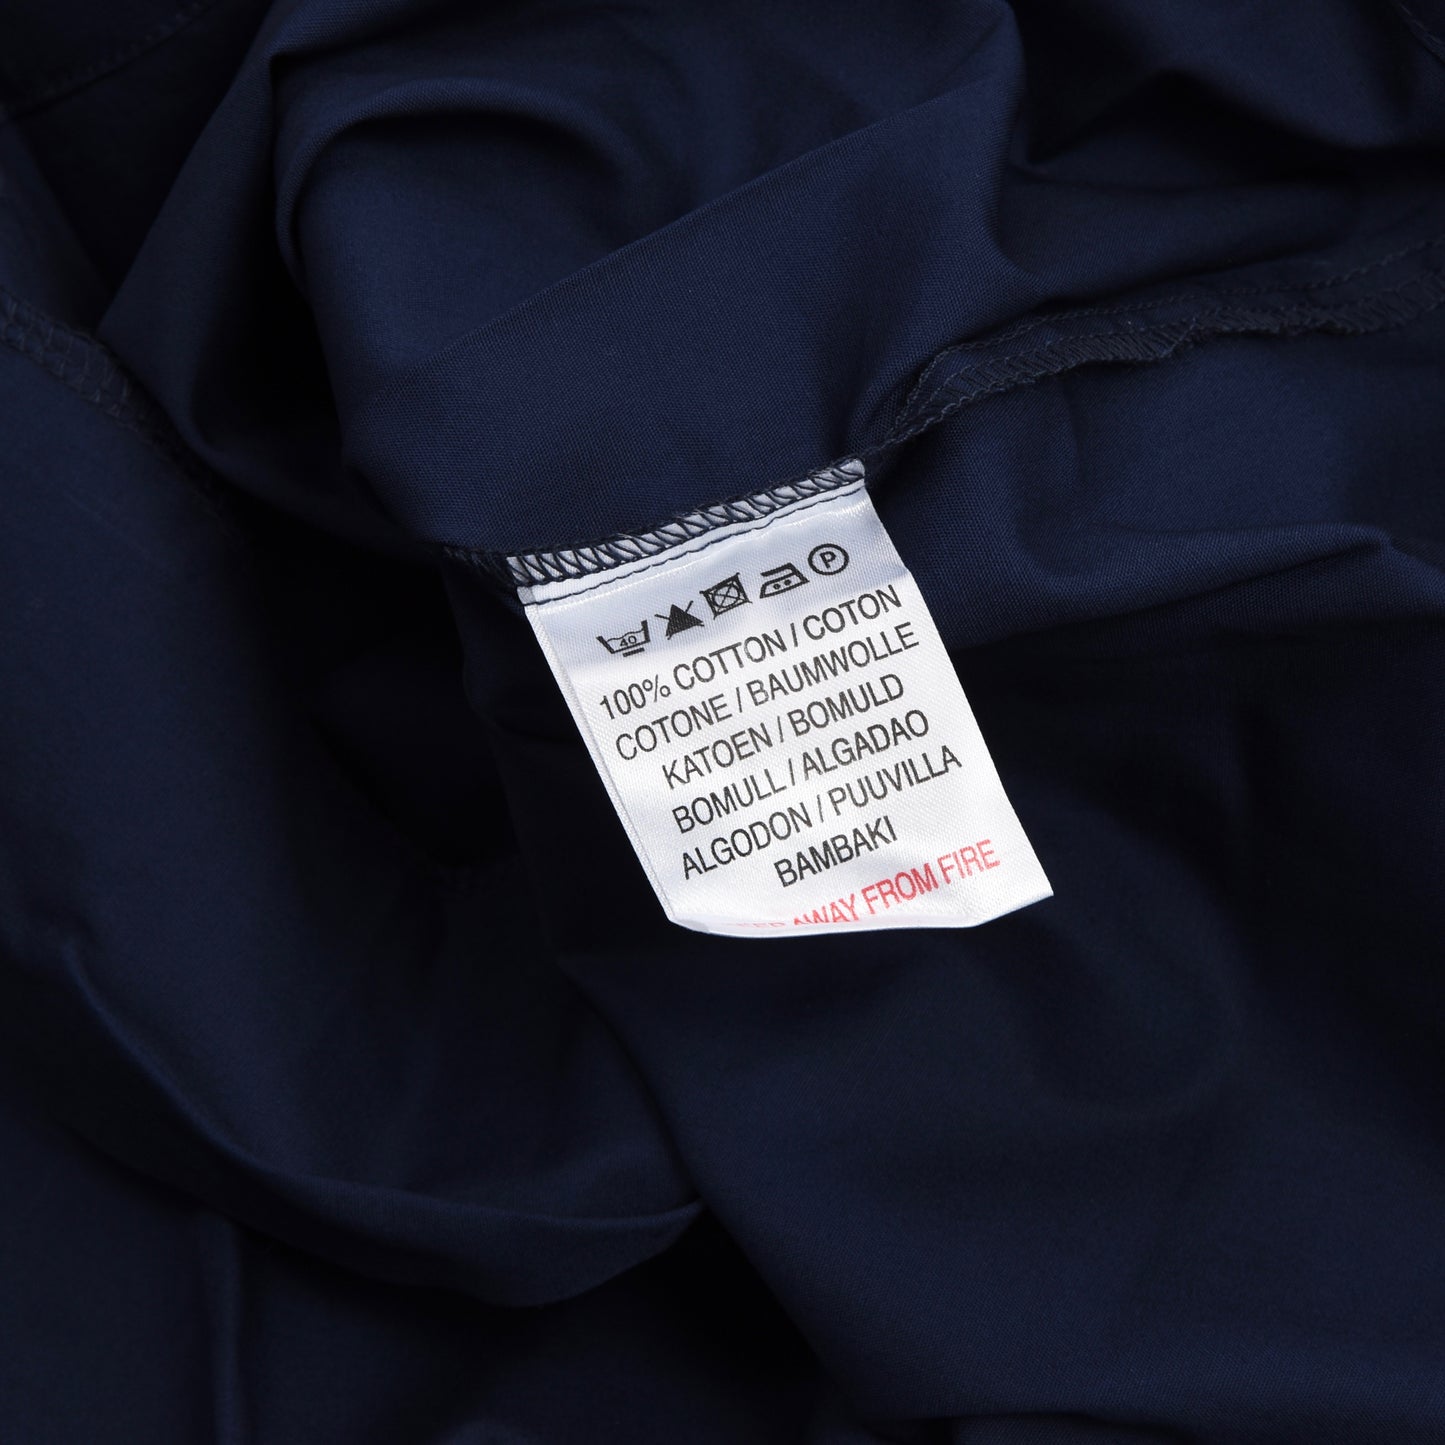 NEW Derek Rose Cotton Pyjamas Size XXL/56 - Navy Blue